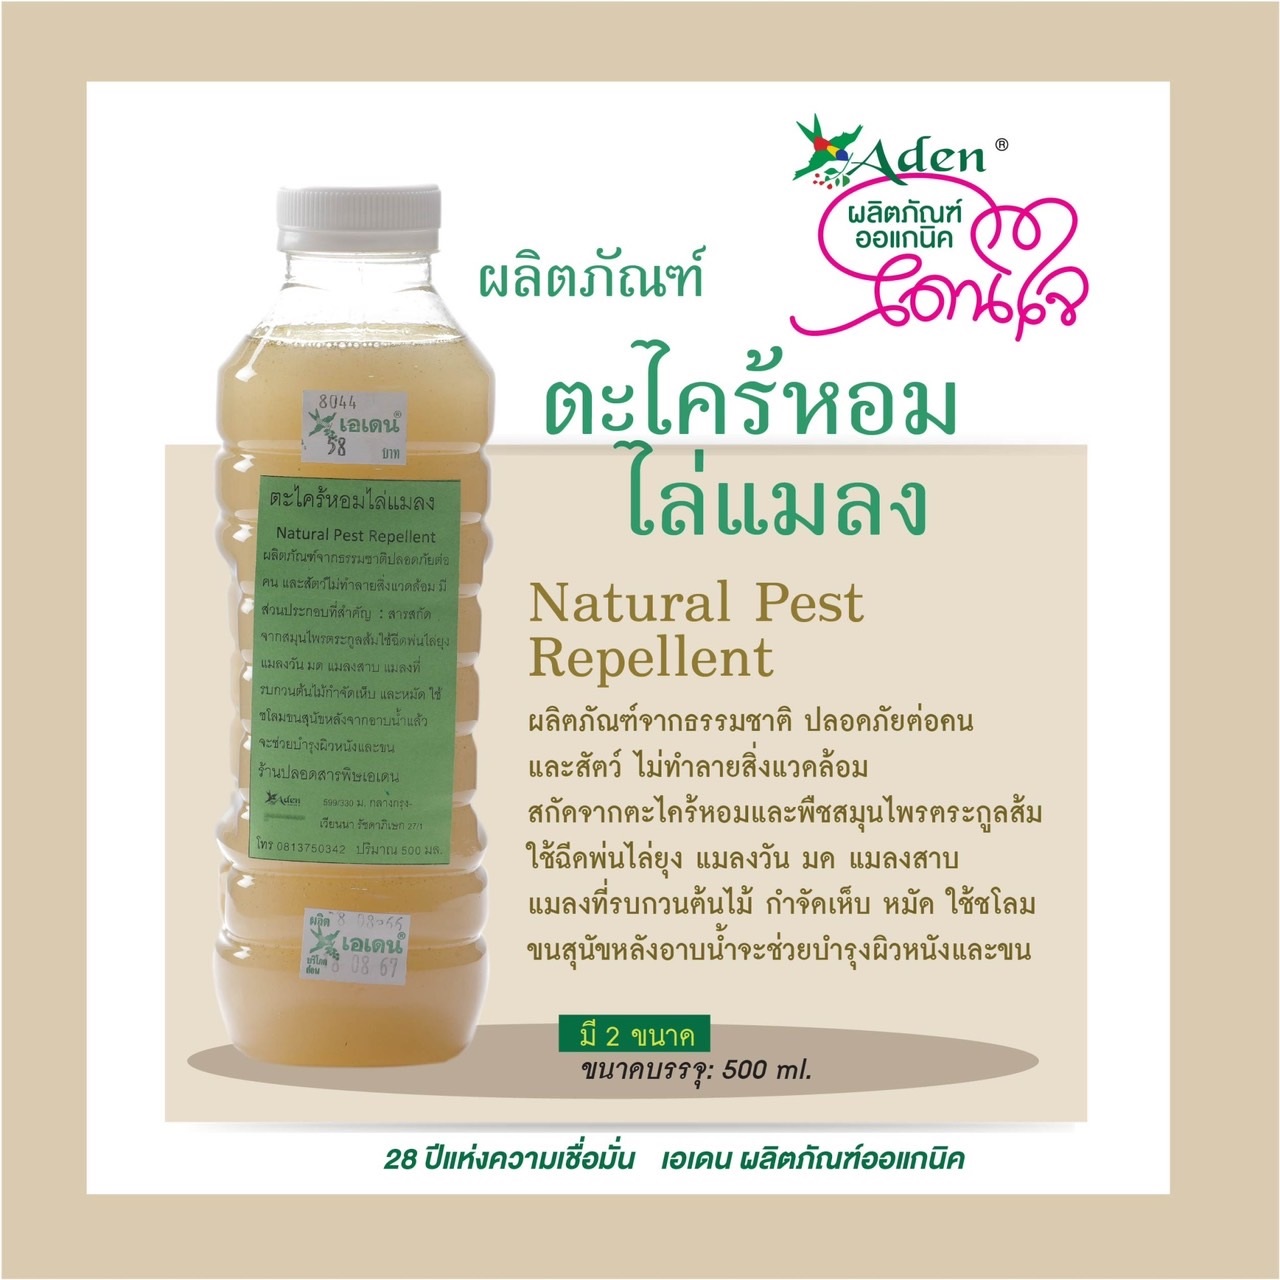 P11-0253 - : - น้ำมันตะไคร้หอมไล่แมลง ( Natural pest repellent)  